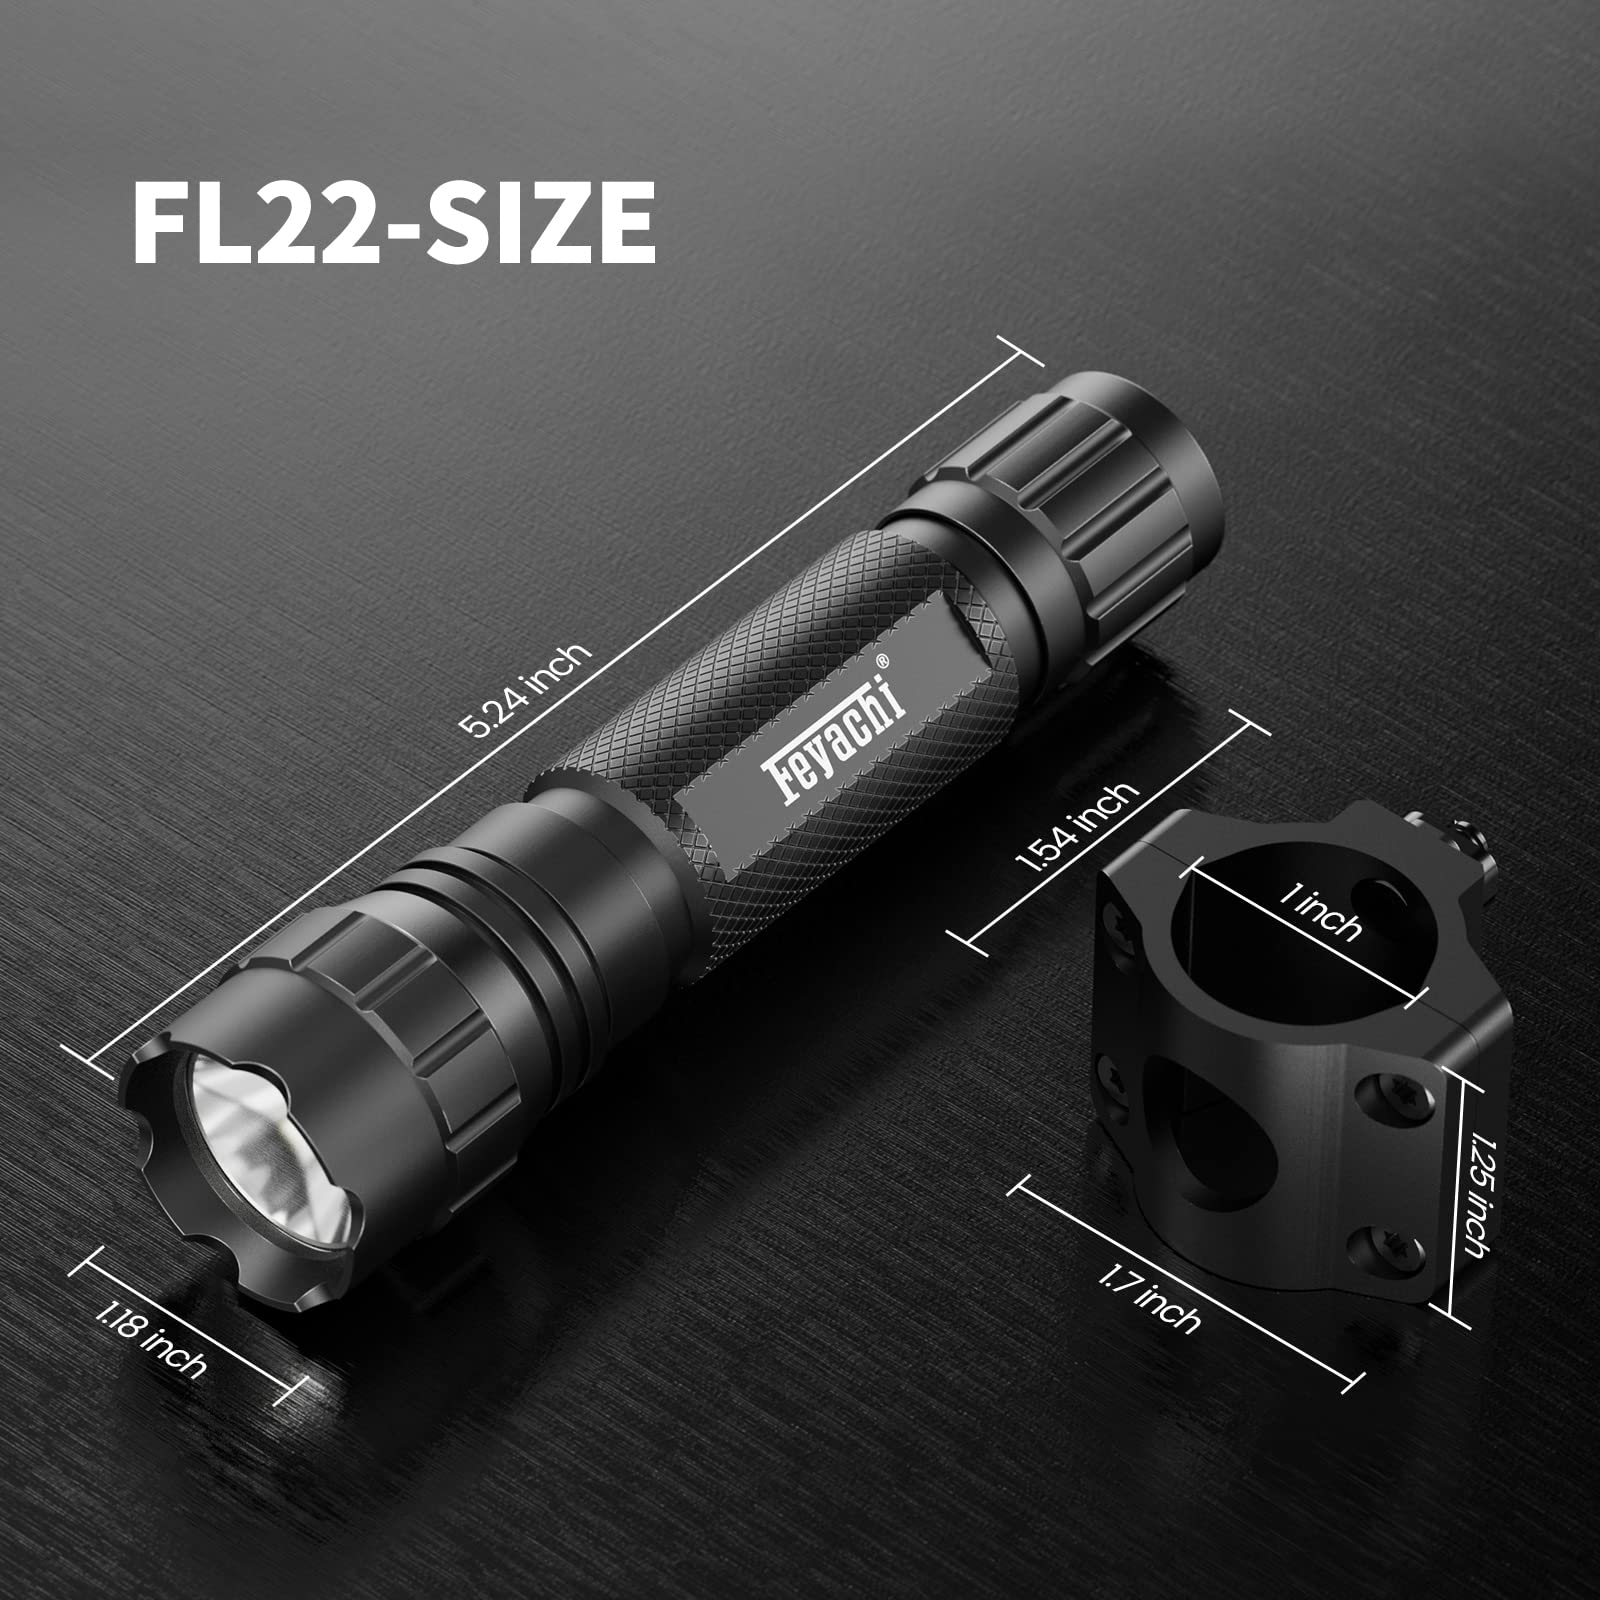 Feyachi FL22-MB Tactical Flashlight 1200 Lumen LED Weapon Light with Low Profile Mlok Flashlight Mount, Pressure Switch